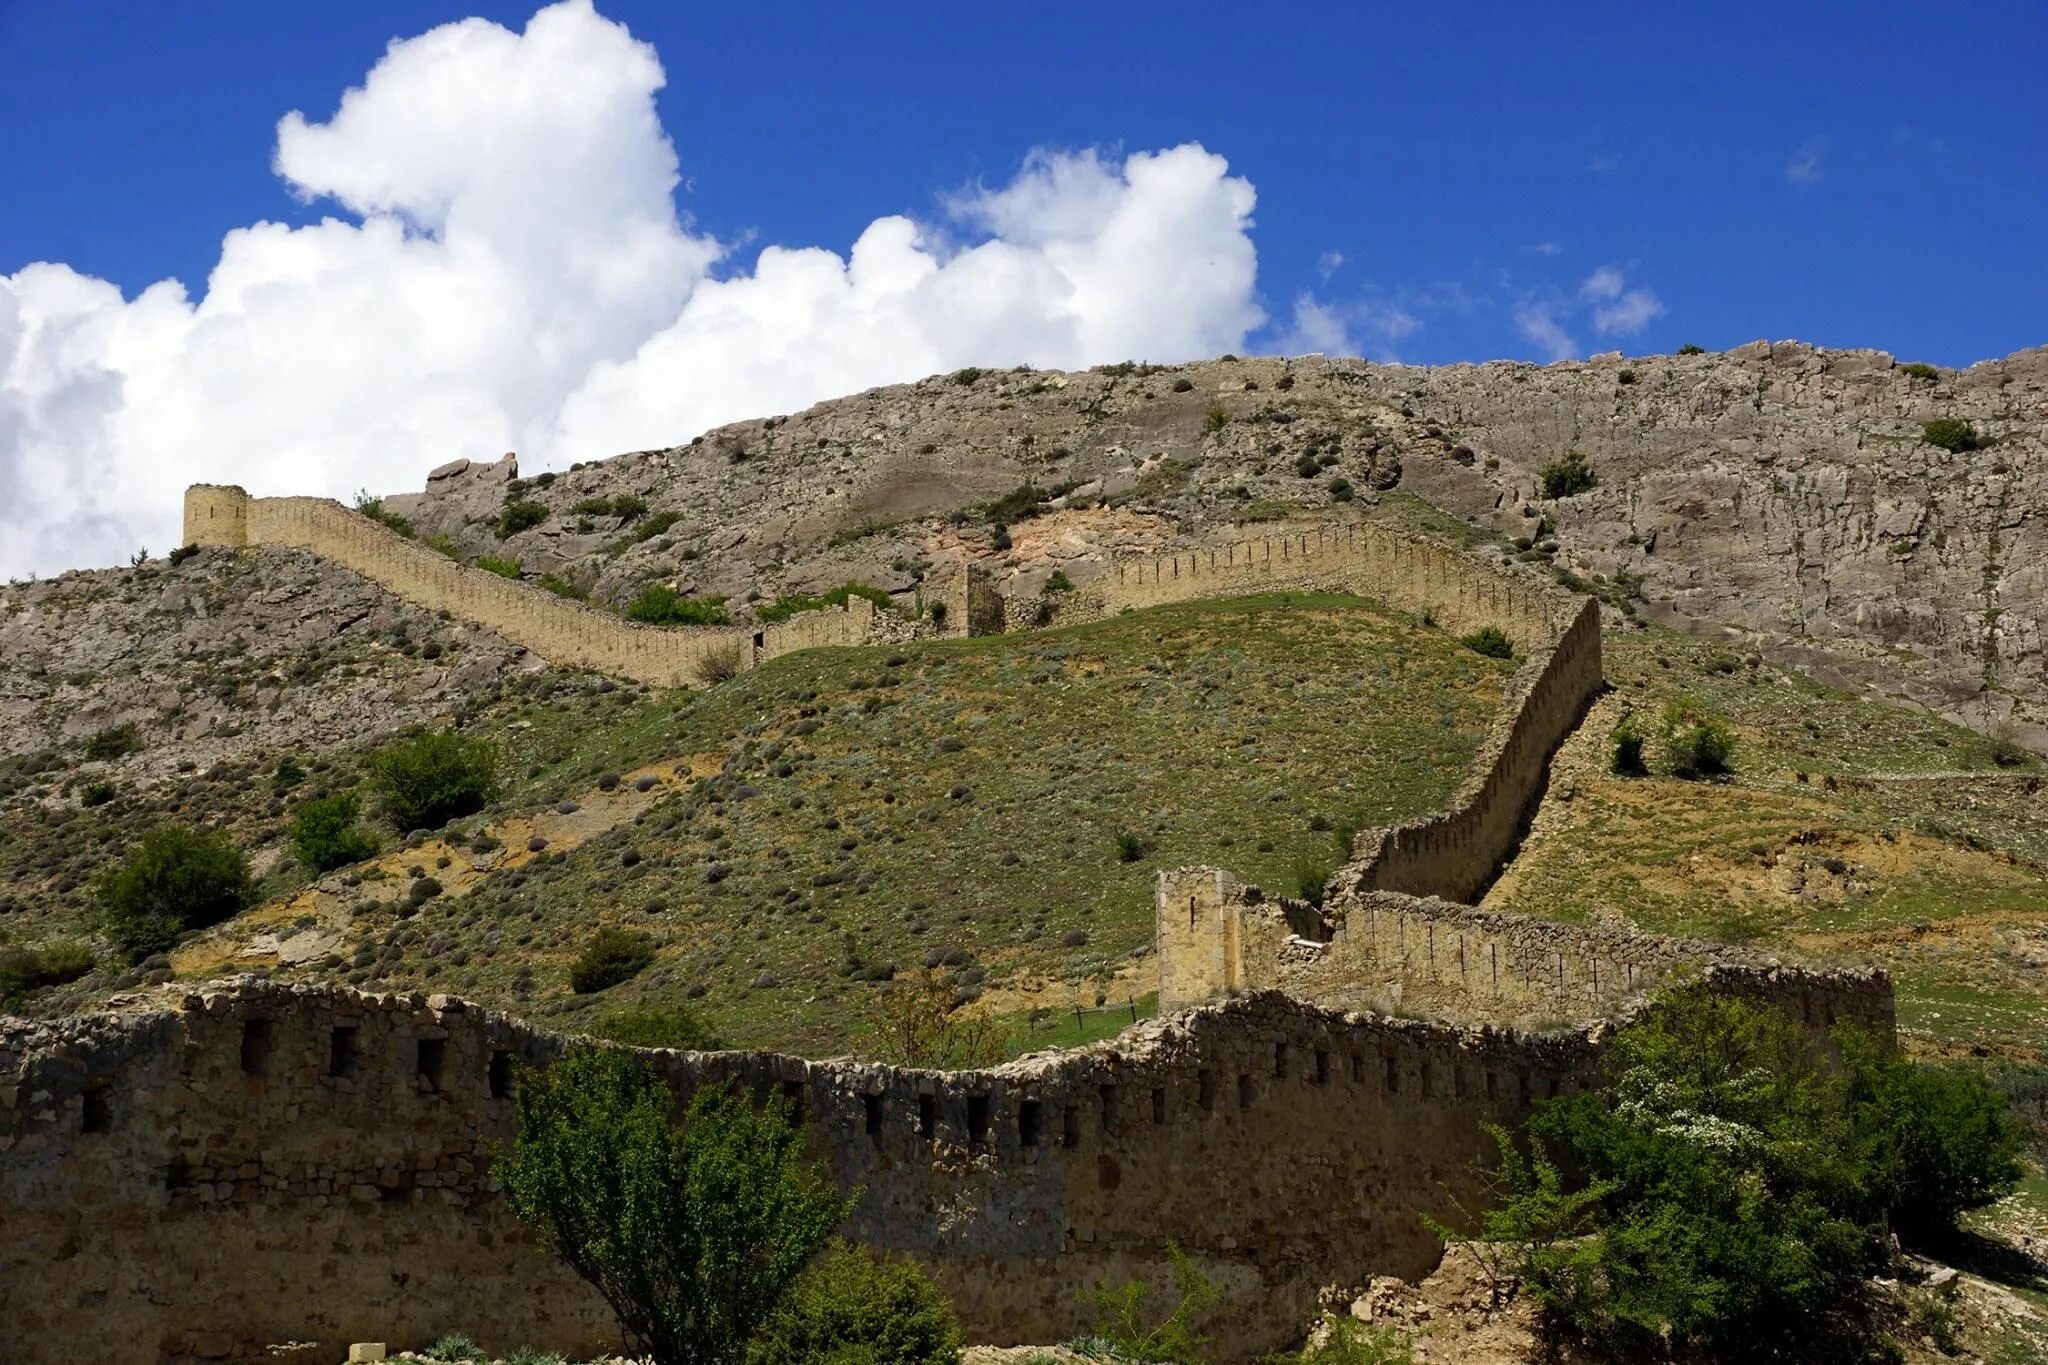 Гуниб крепость Шамиля. Башня Шамиля в Гунибе. Крепость Гуниб Дагестан. Крепость Шамиля в Дагестане.